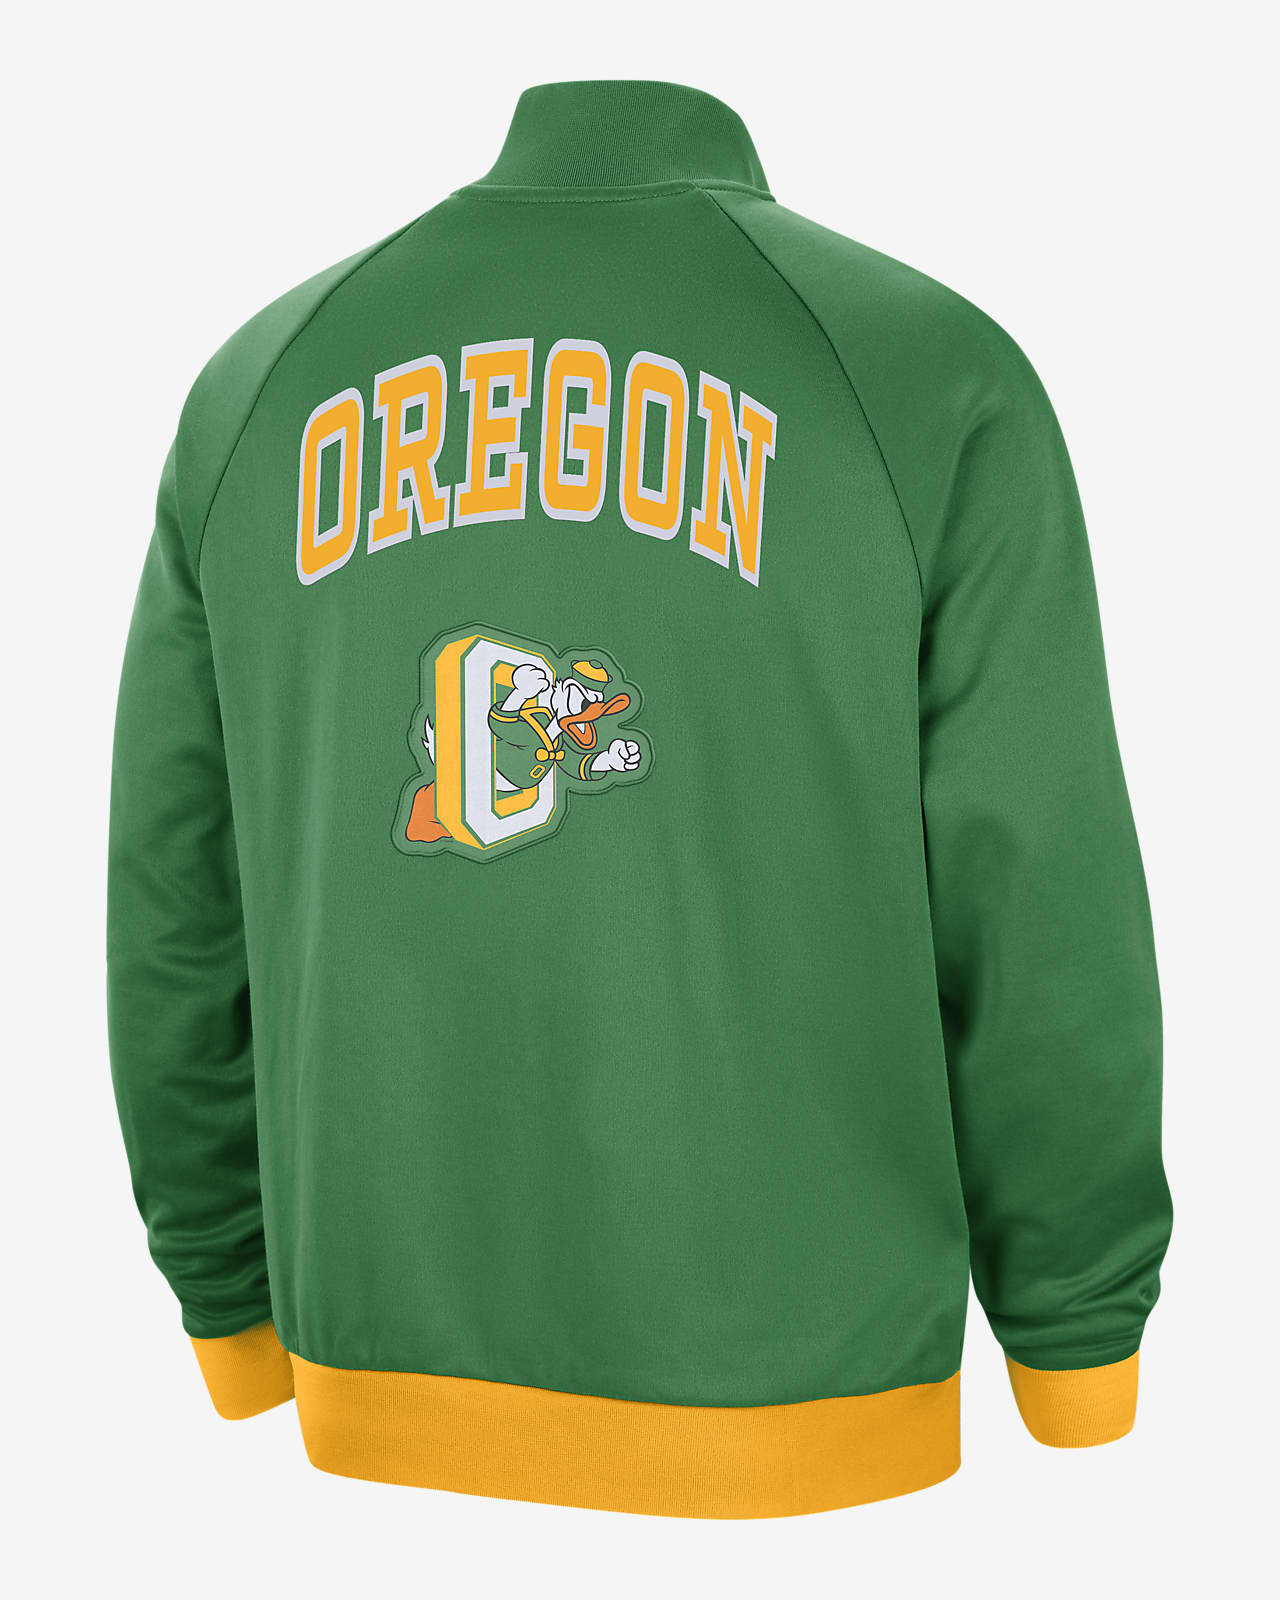 University of Oregon Apparel, Oregon Ducks Football Gear, Oregon Ducks  Gifts